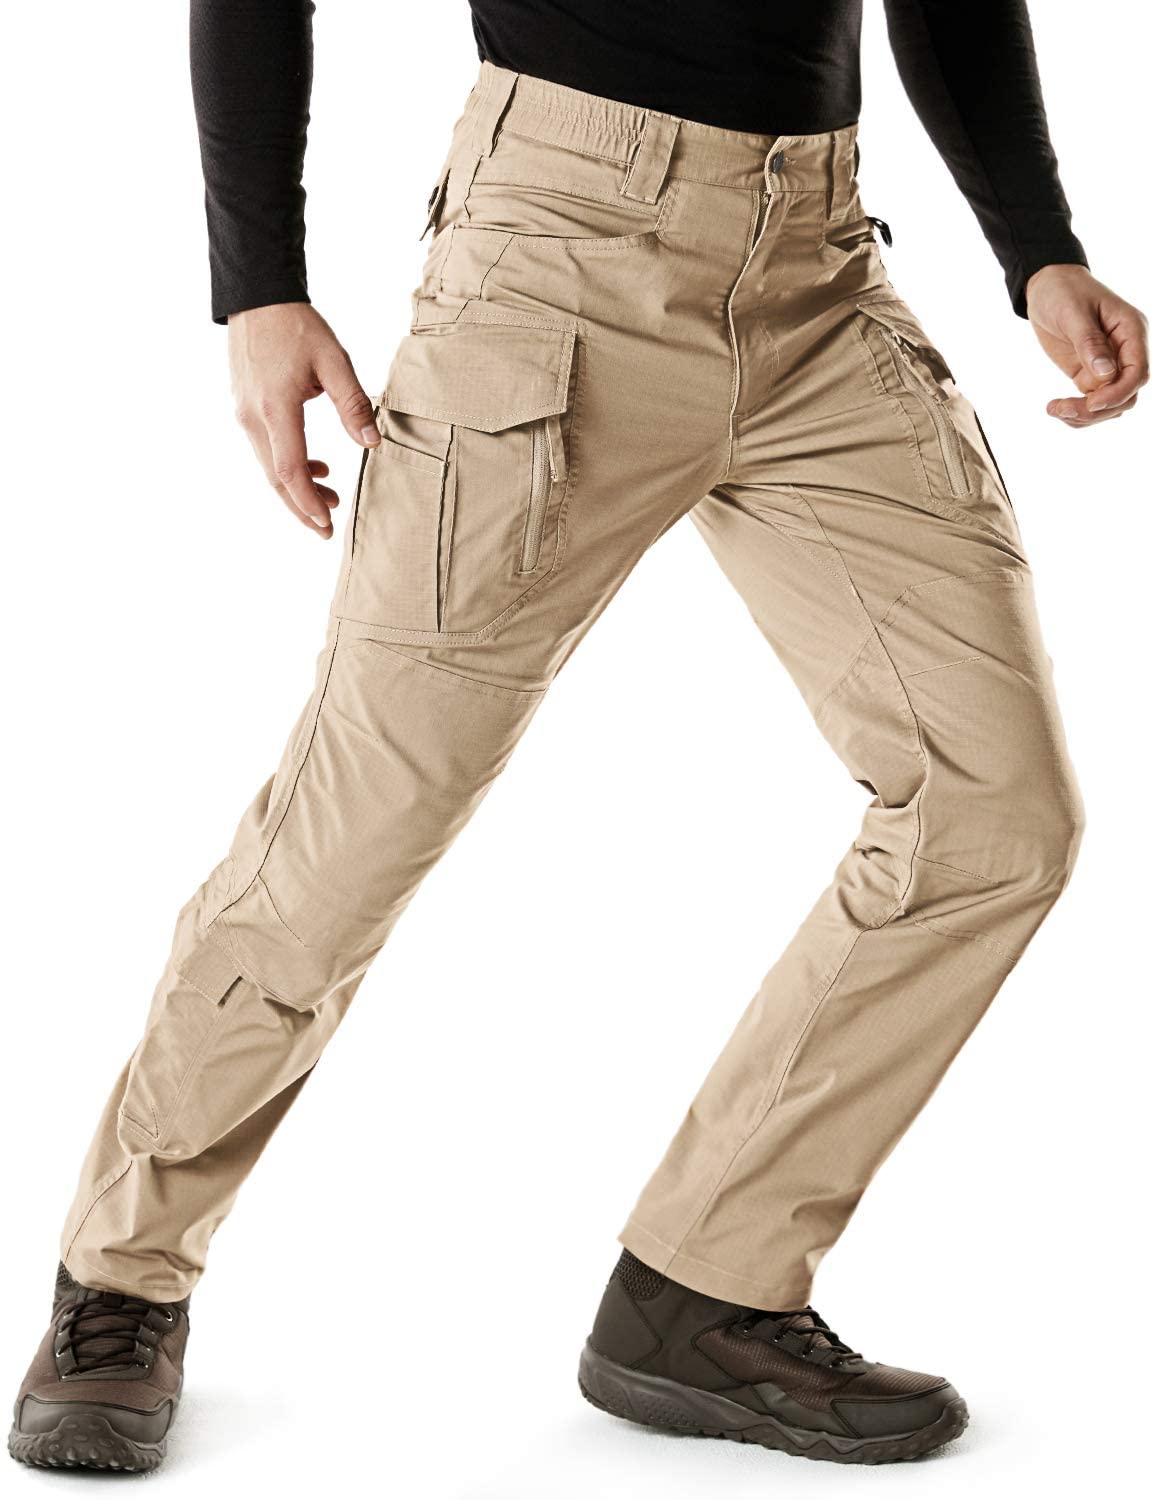 CQR Mens Flex Stretch Tactical Pants Lightweight EDC Outdoor Hiking Work Pants Water Repellent Ripstop Cargo Pants